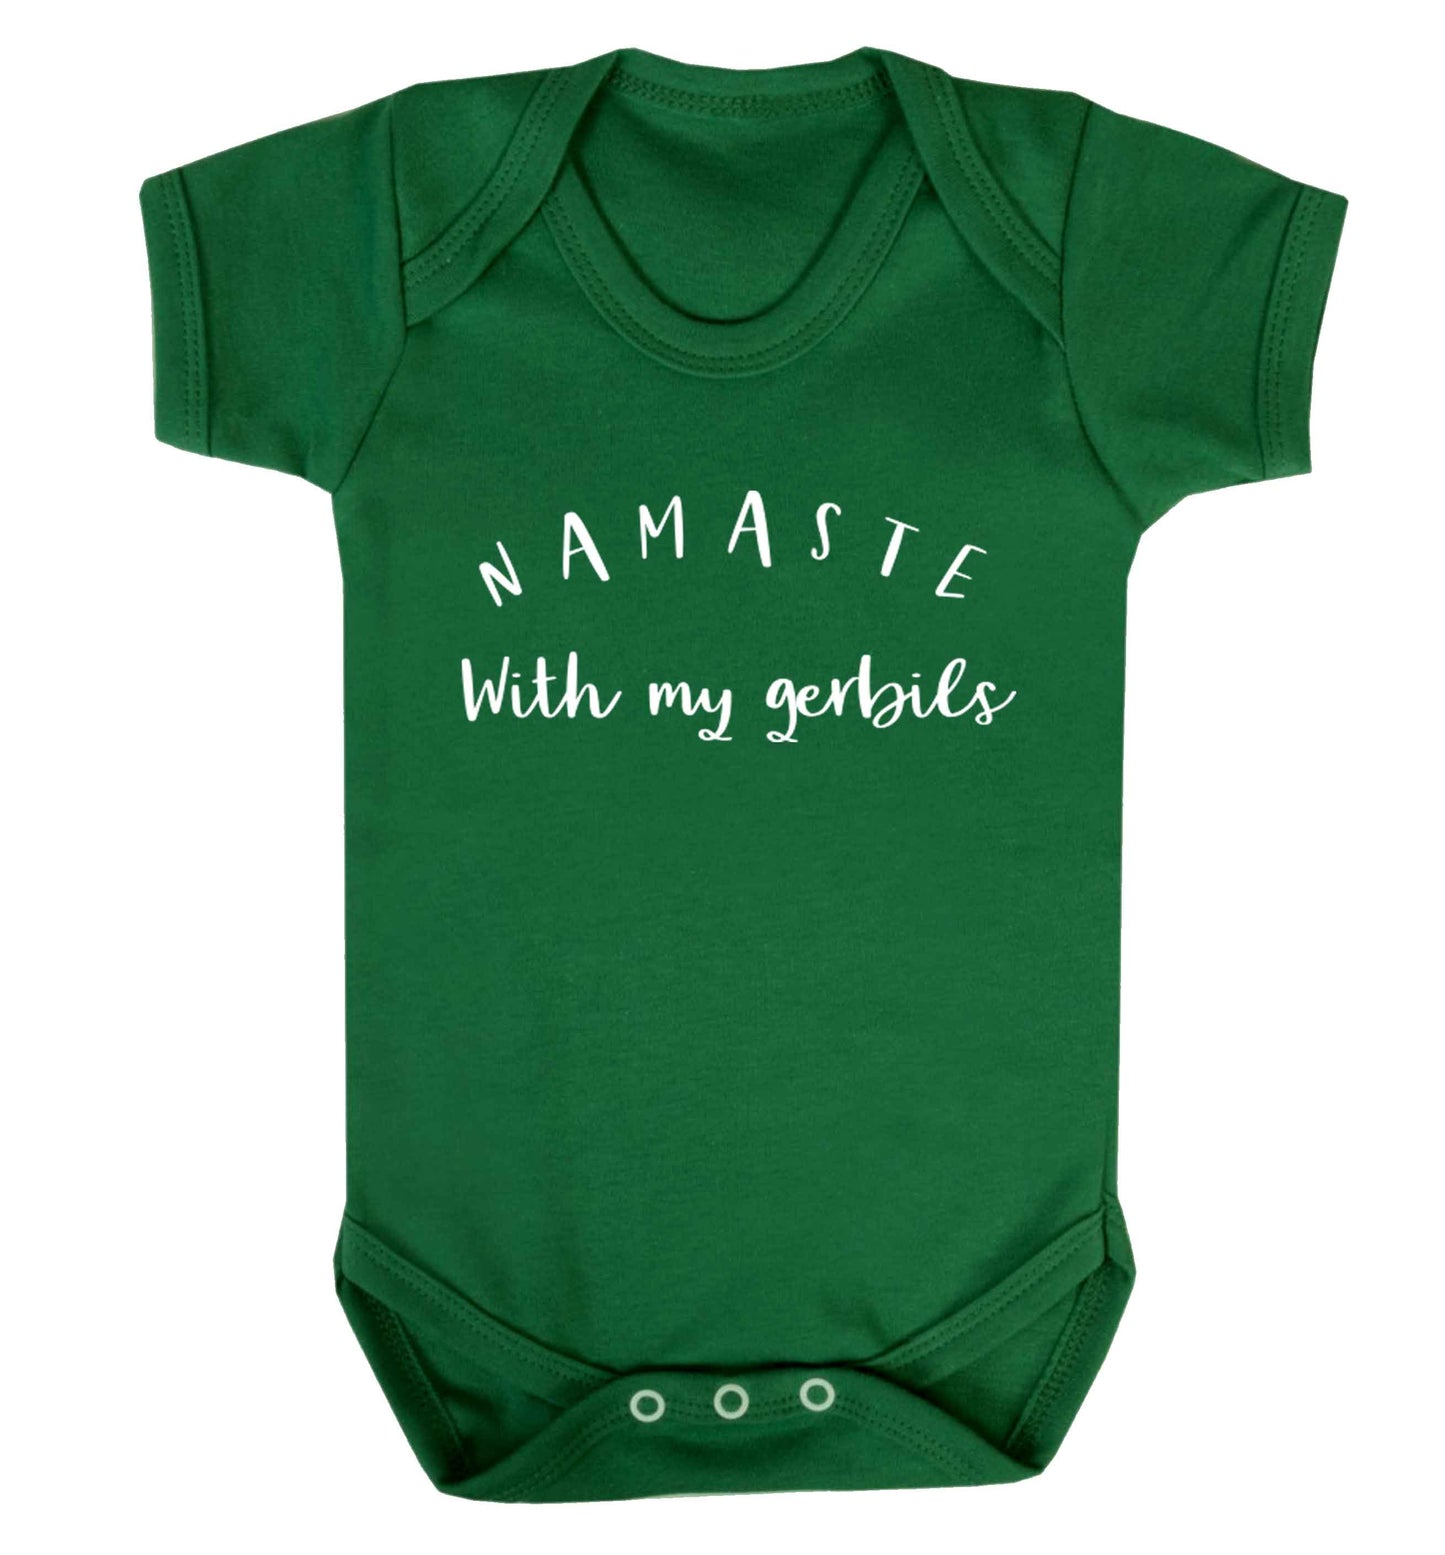 Namaste with my gerbils Baby Vest green 18-24 months